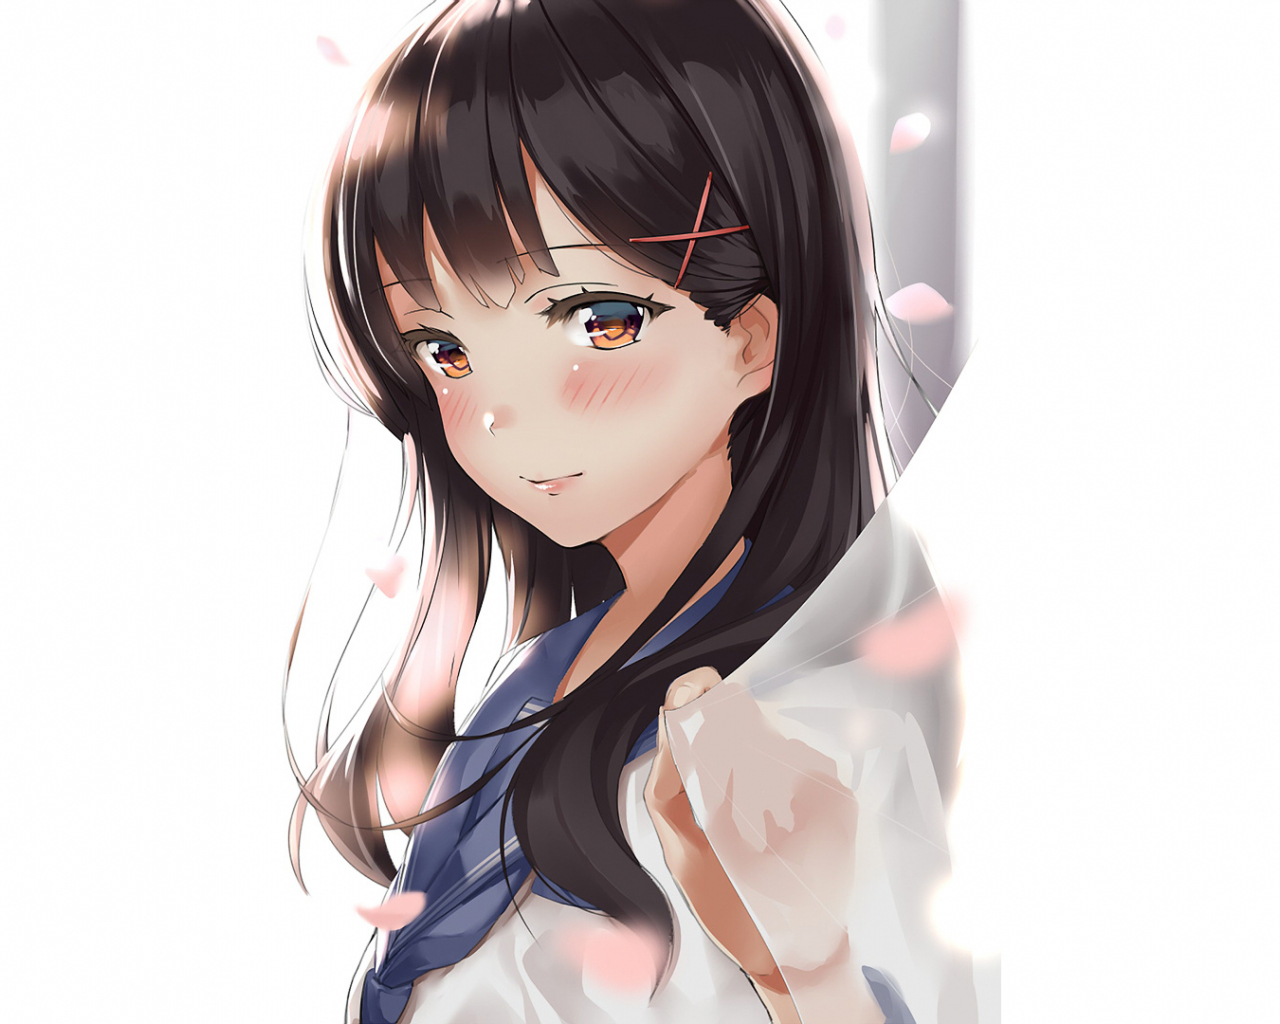 Download wallpaper 1280x1024 anime girl, brown eyes, cute, standard 5:4  fullscreen wallpaper, 1280x1024 hd background, 4941